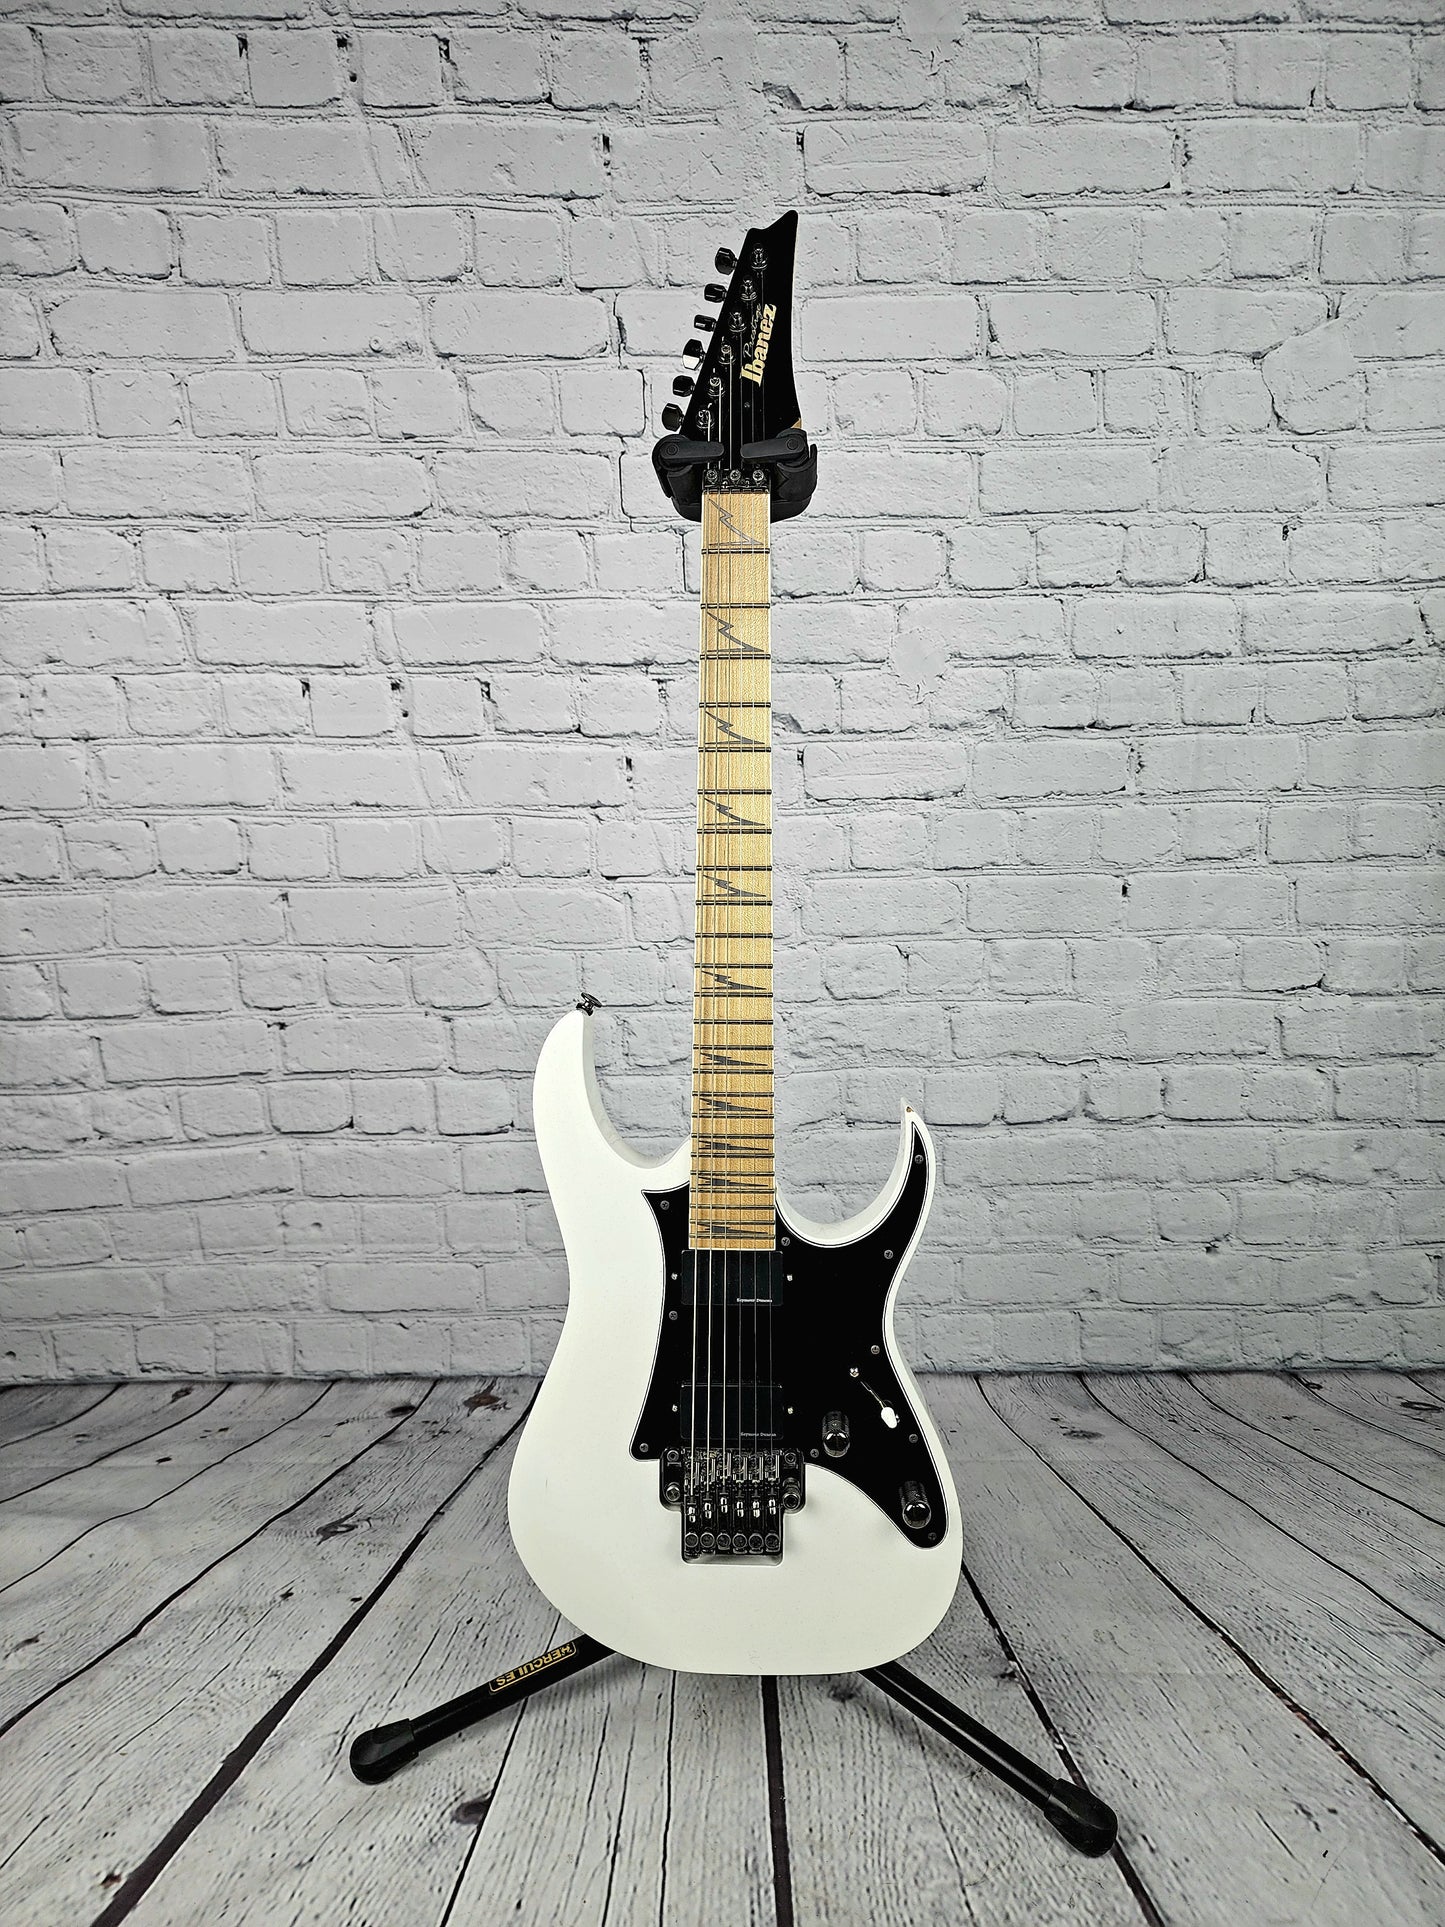 USED Ibanez Prestige RG3550MZ Galaxy White Seymour Duncan Blackouts Electric Guitar